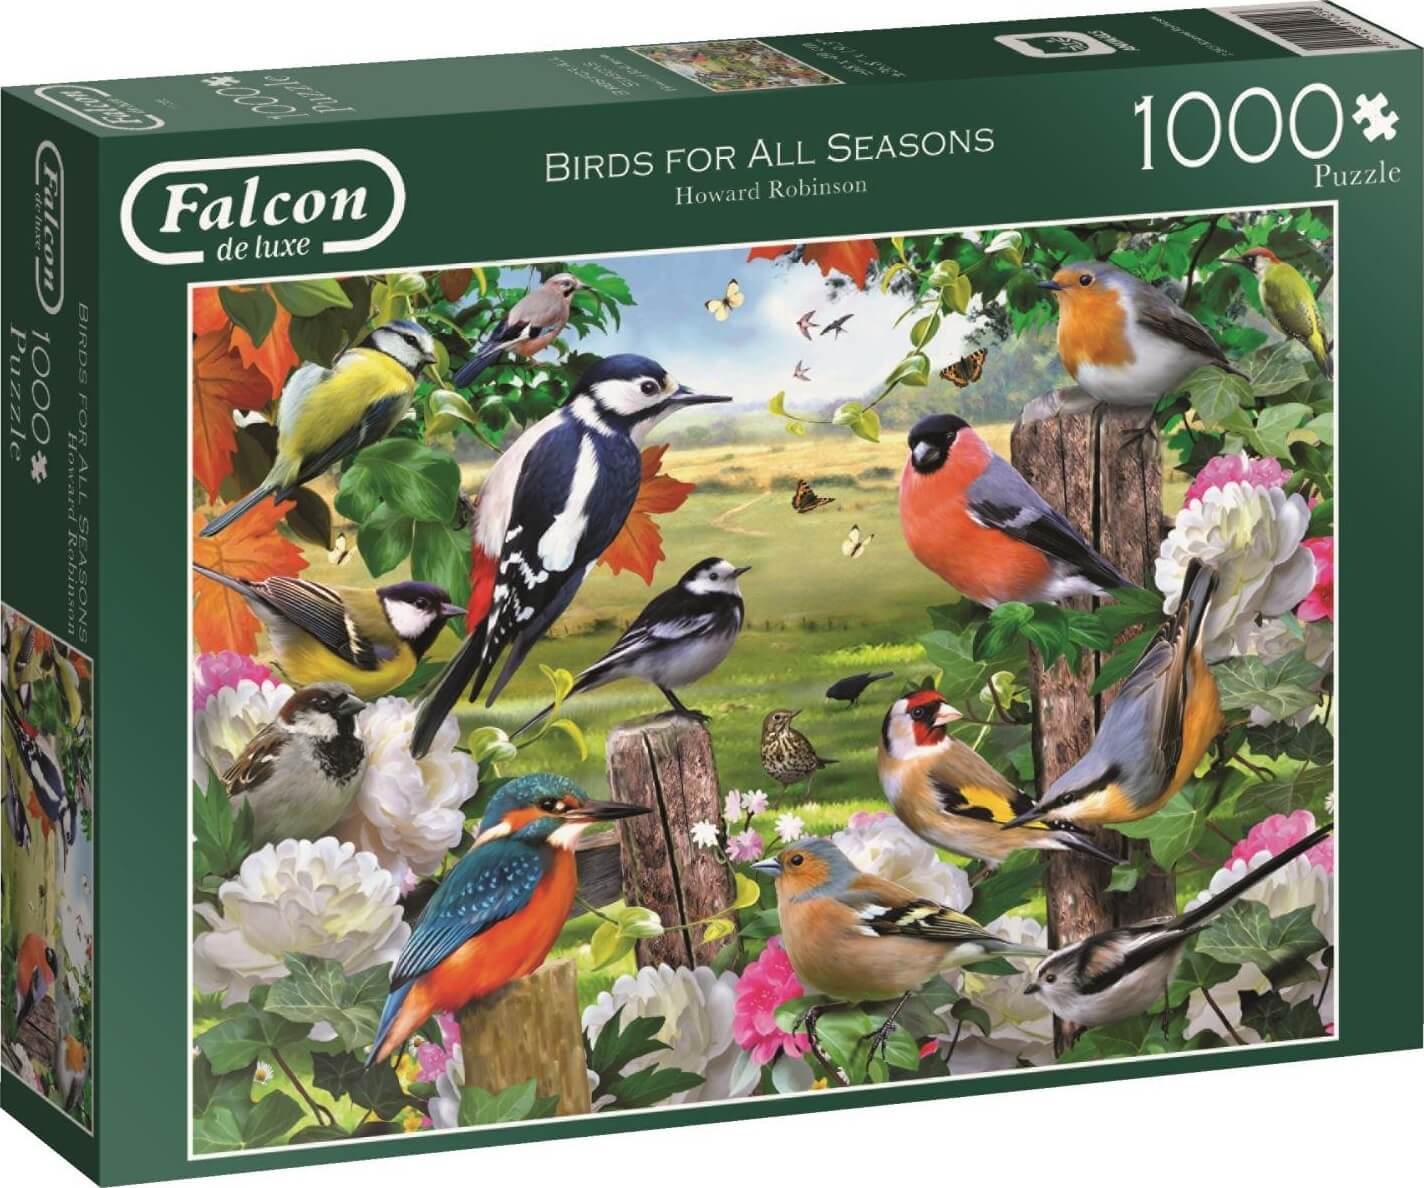 1000 Birds for All Seasons, Howard Robinson